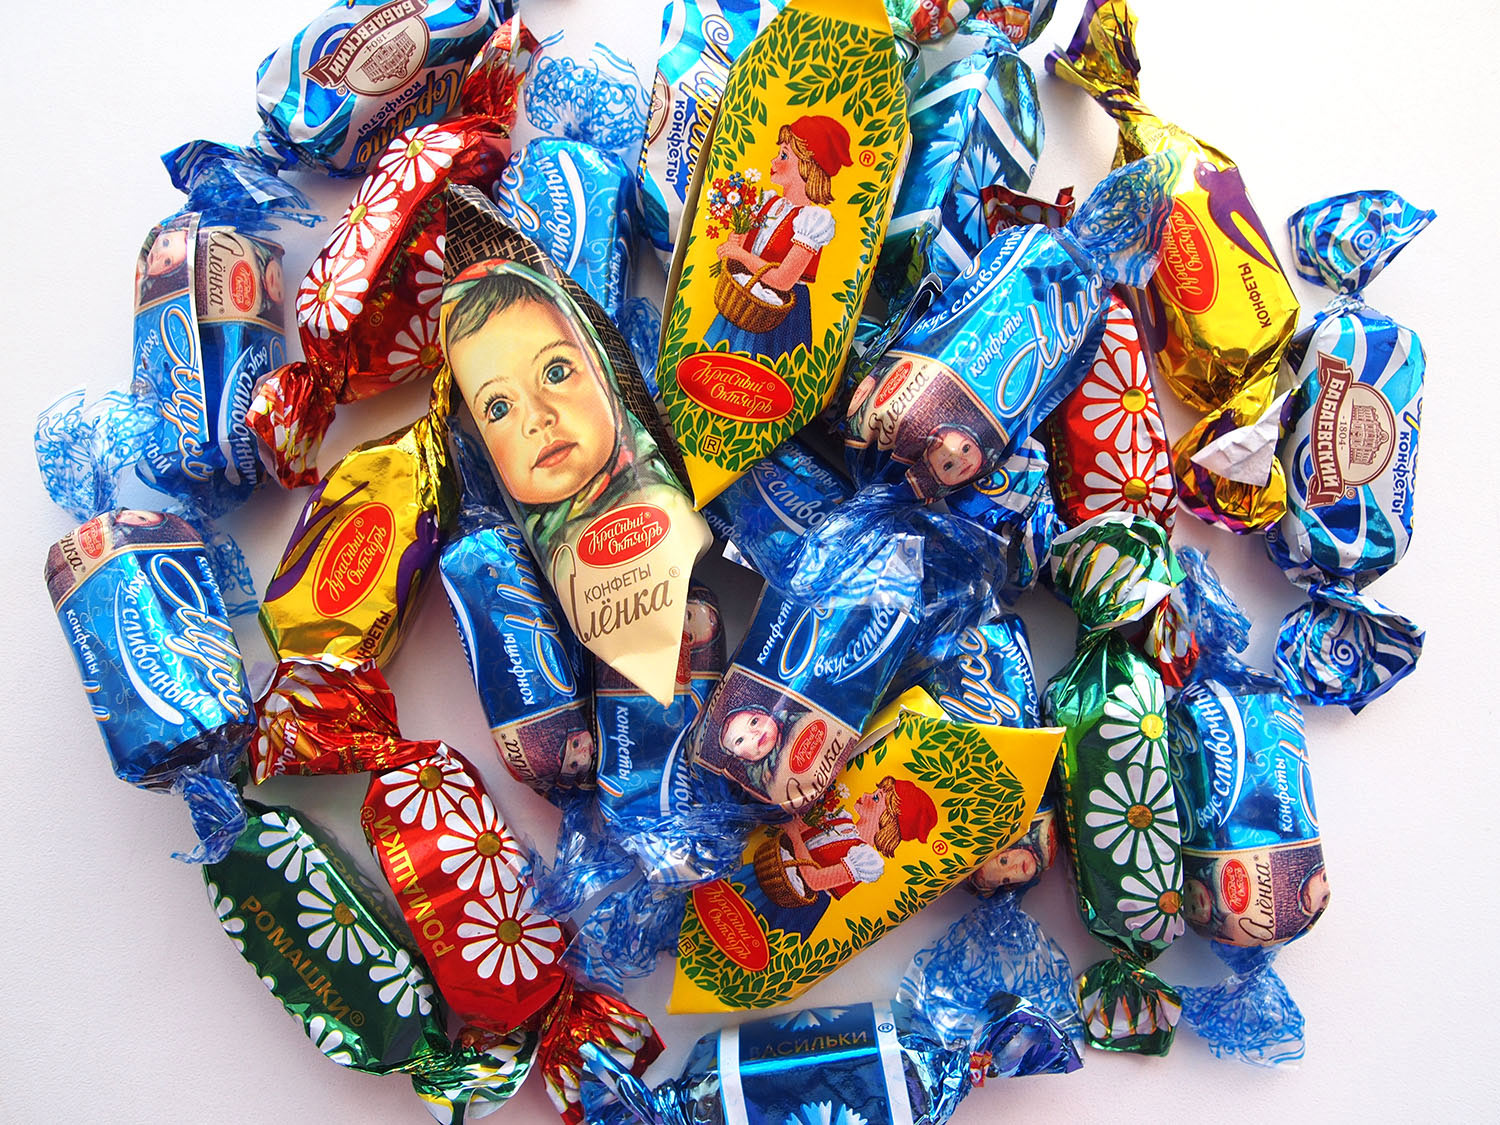 Russian Candy Telegraph